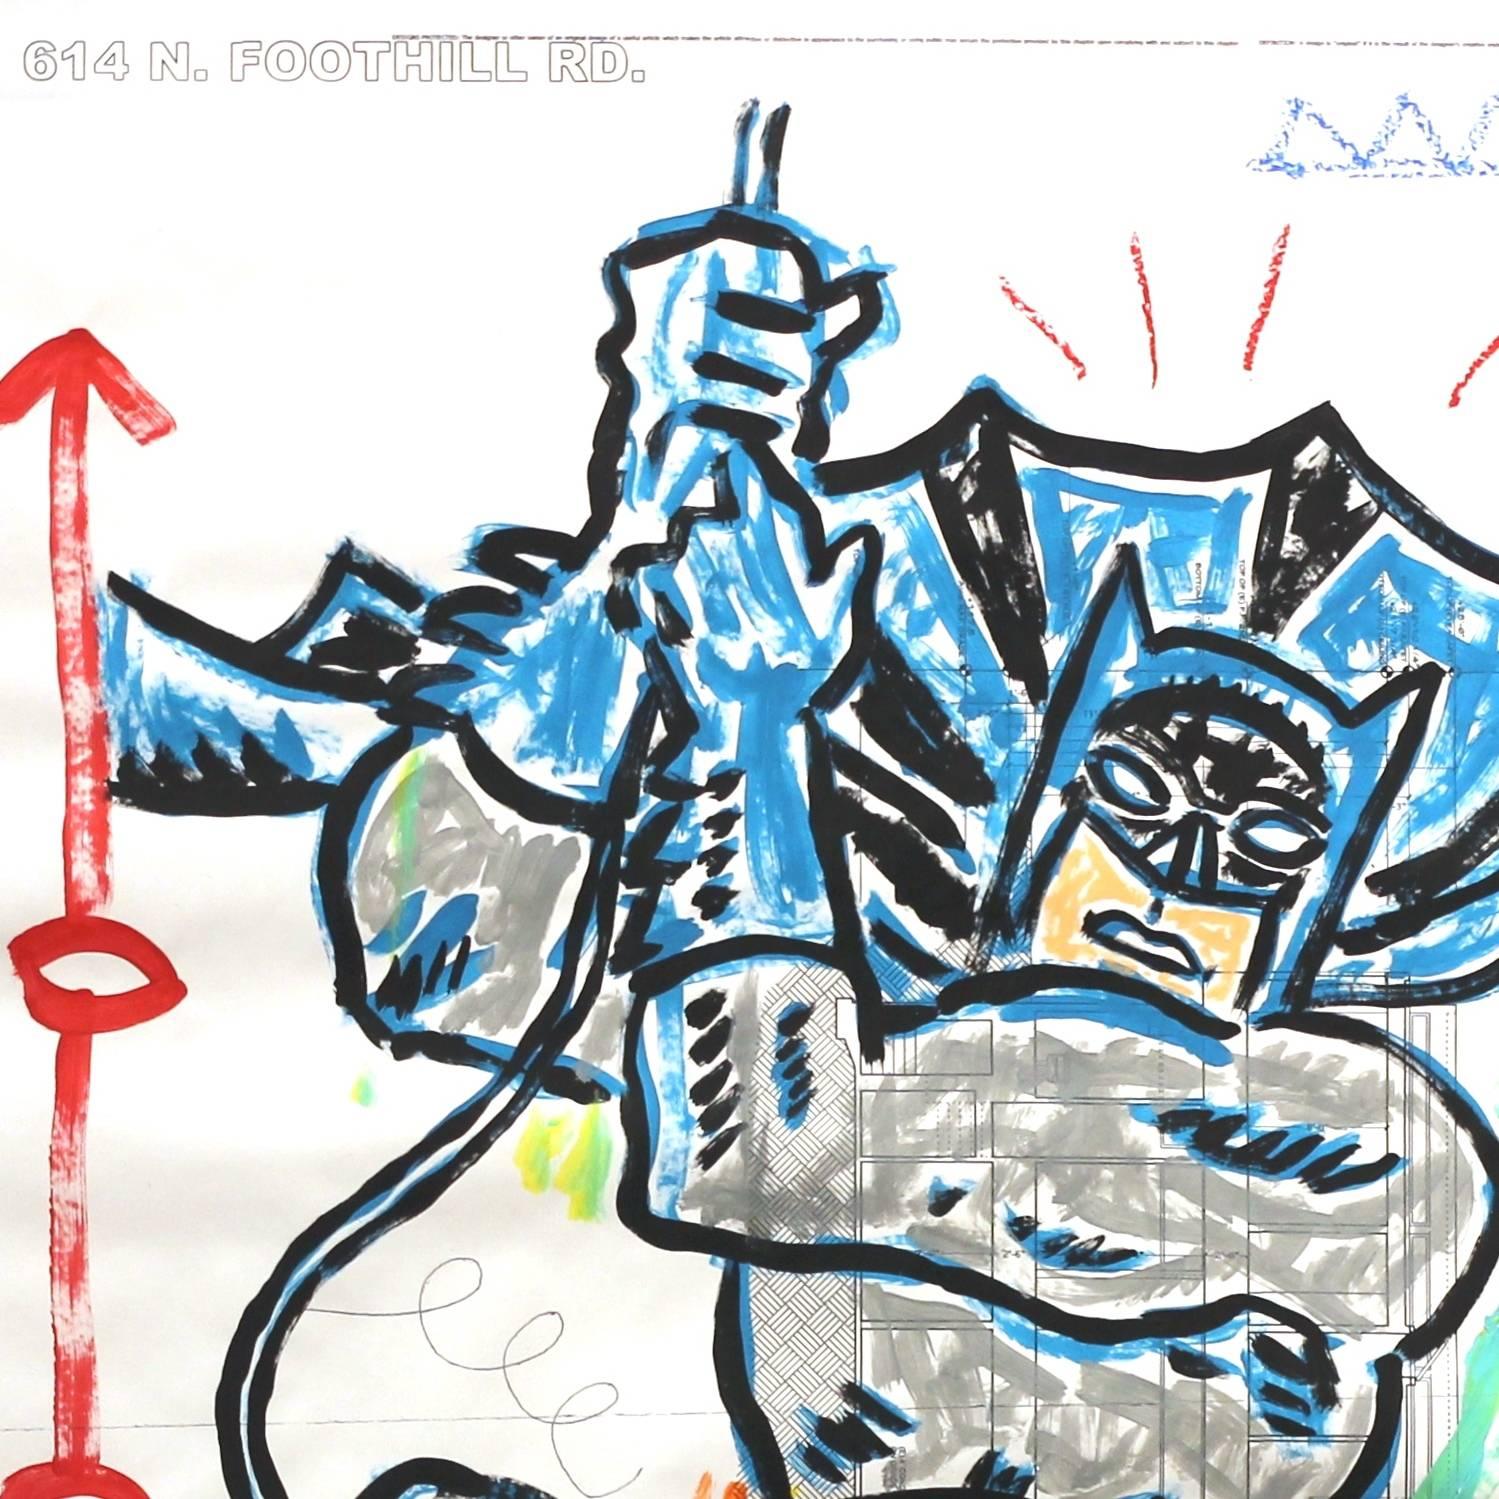 Hurry Batman! - Painting by Gary John